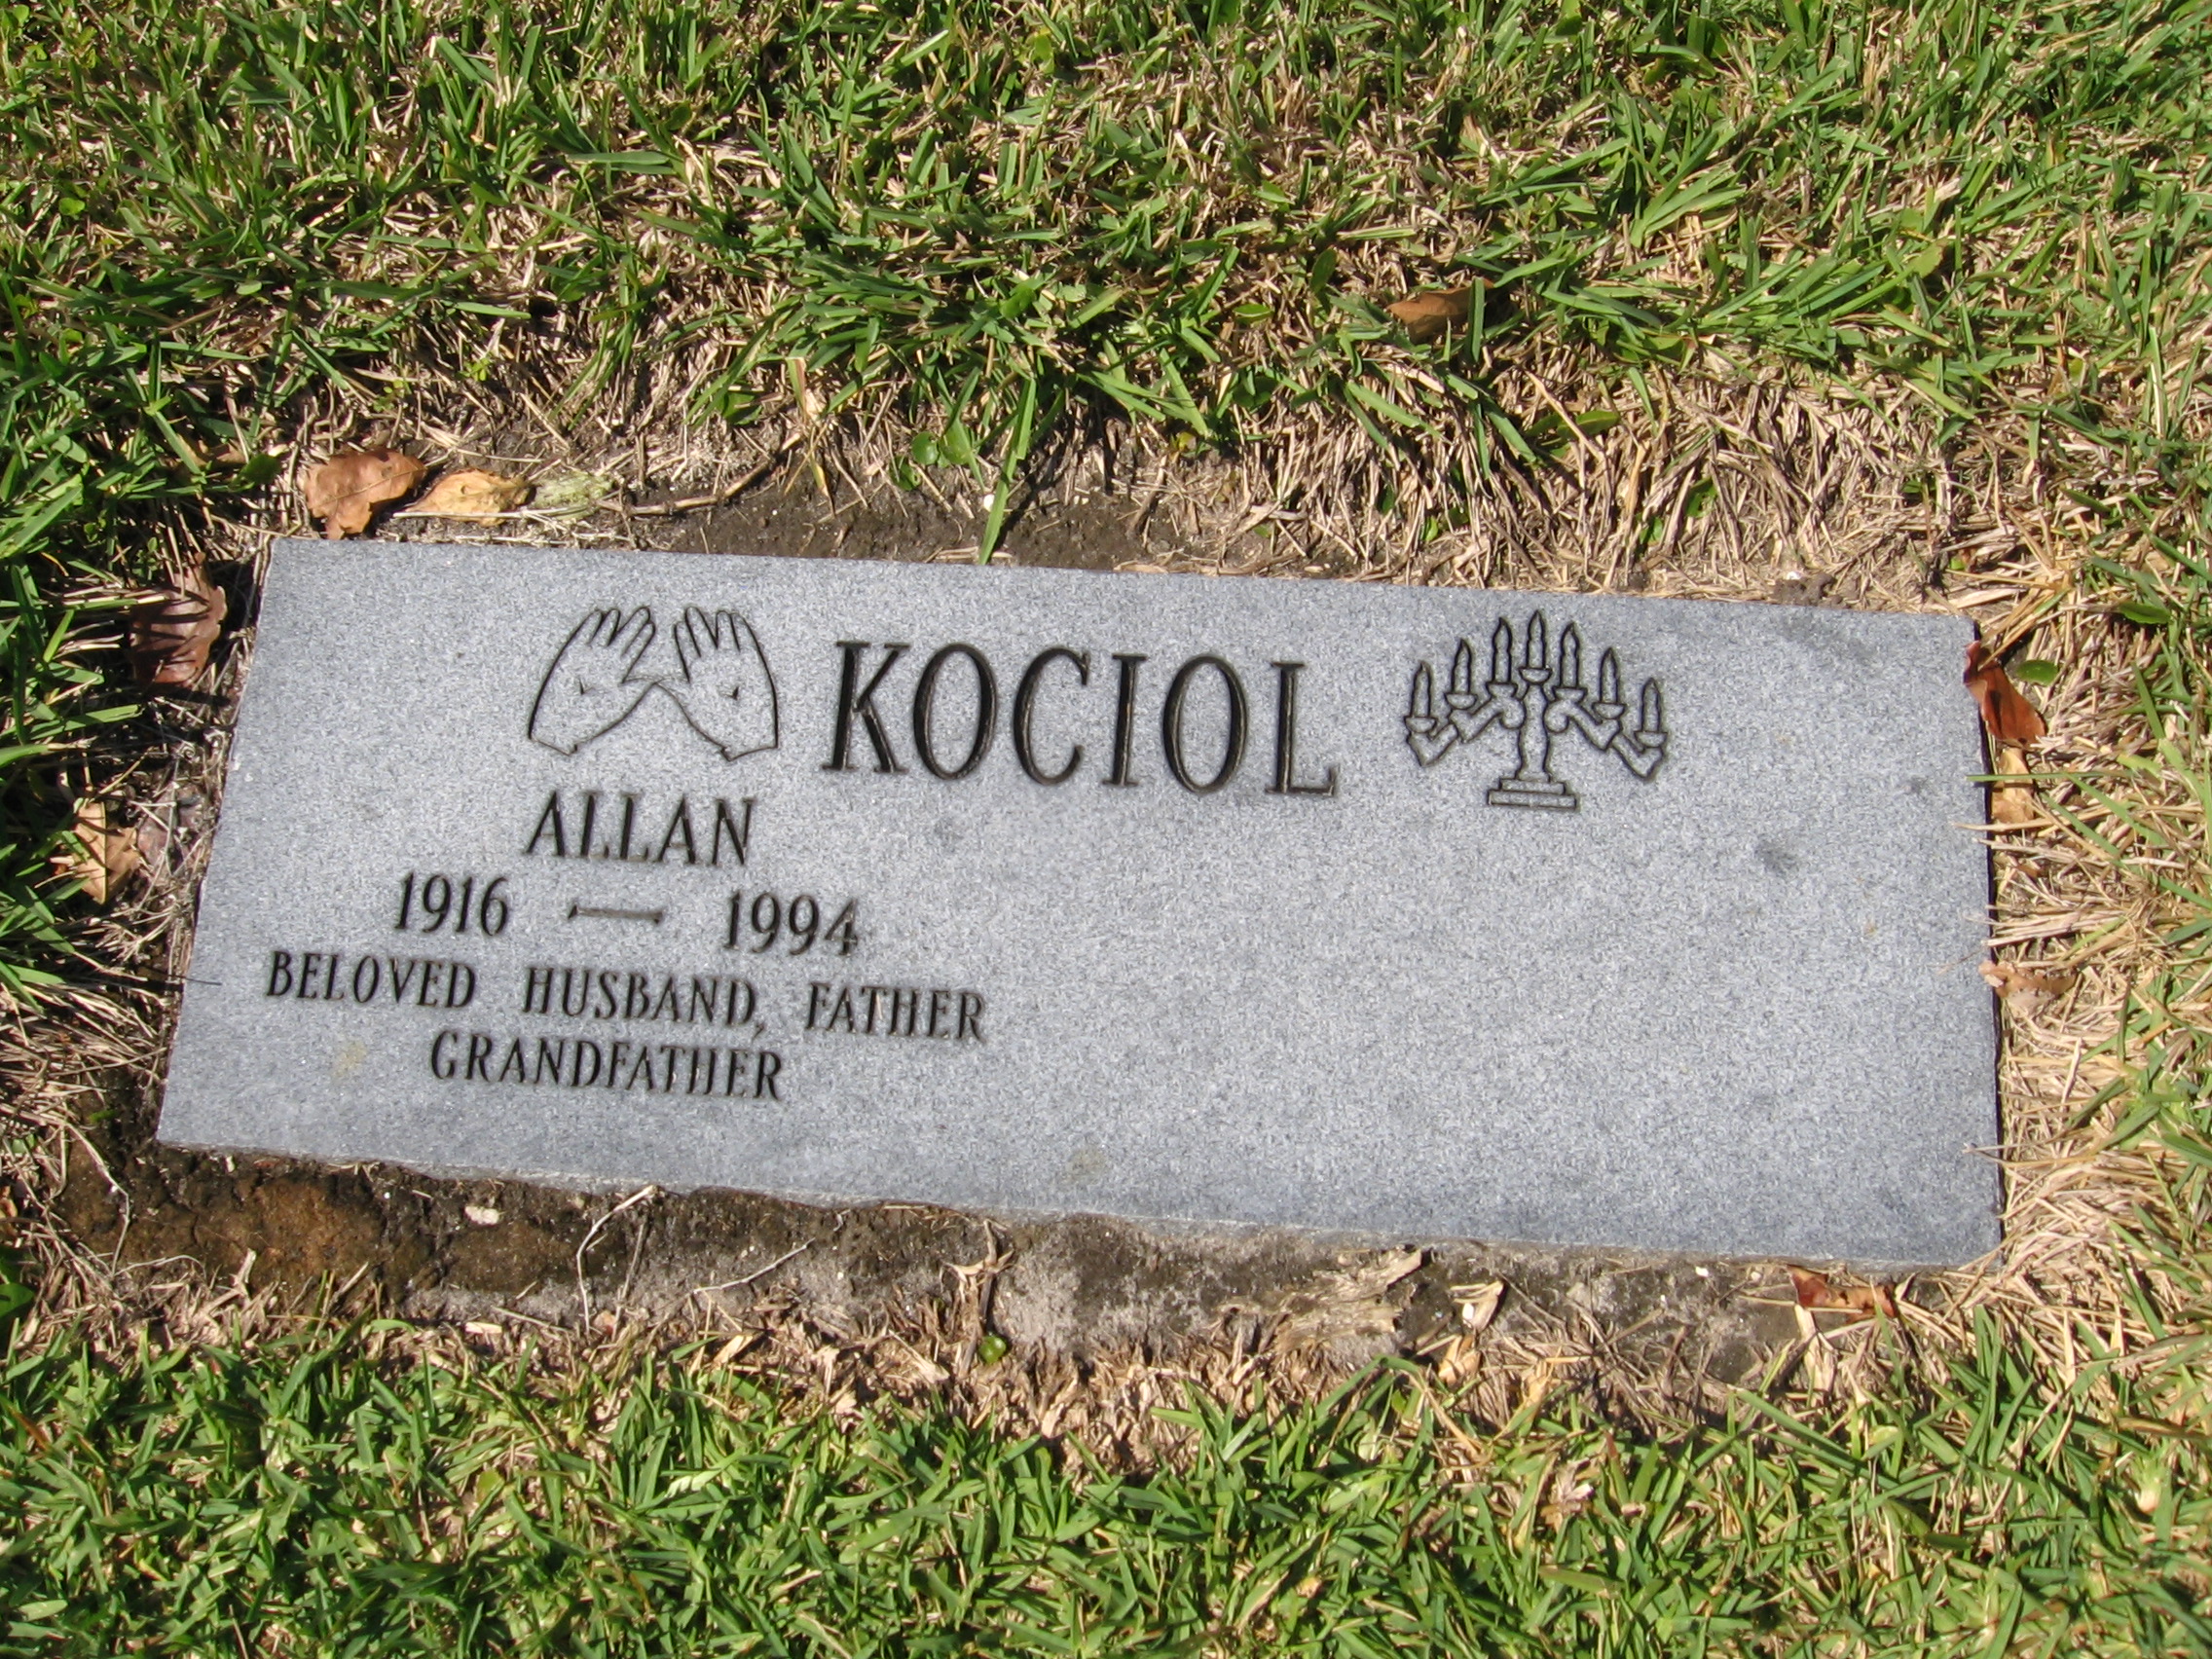 Allan Kociol